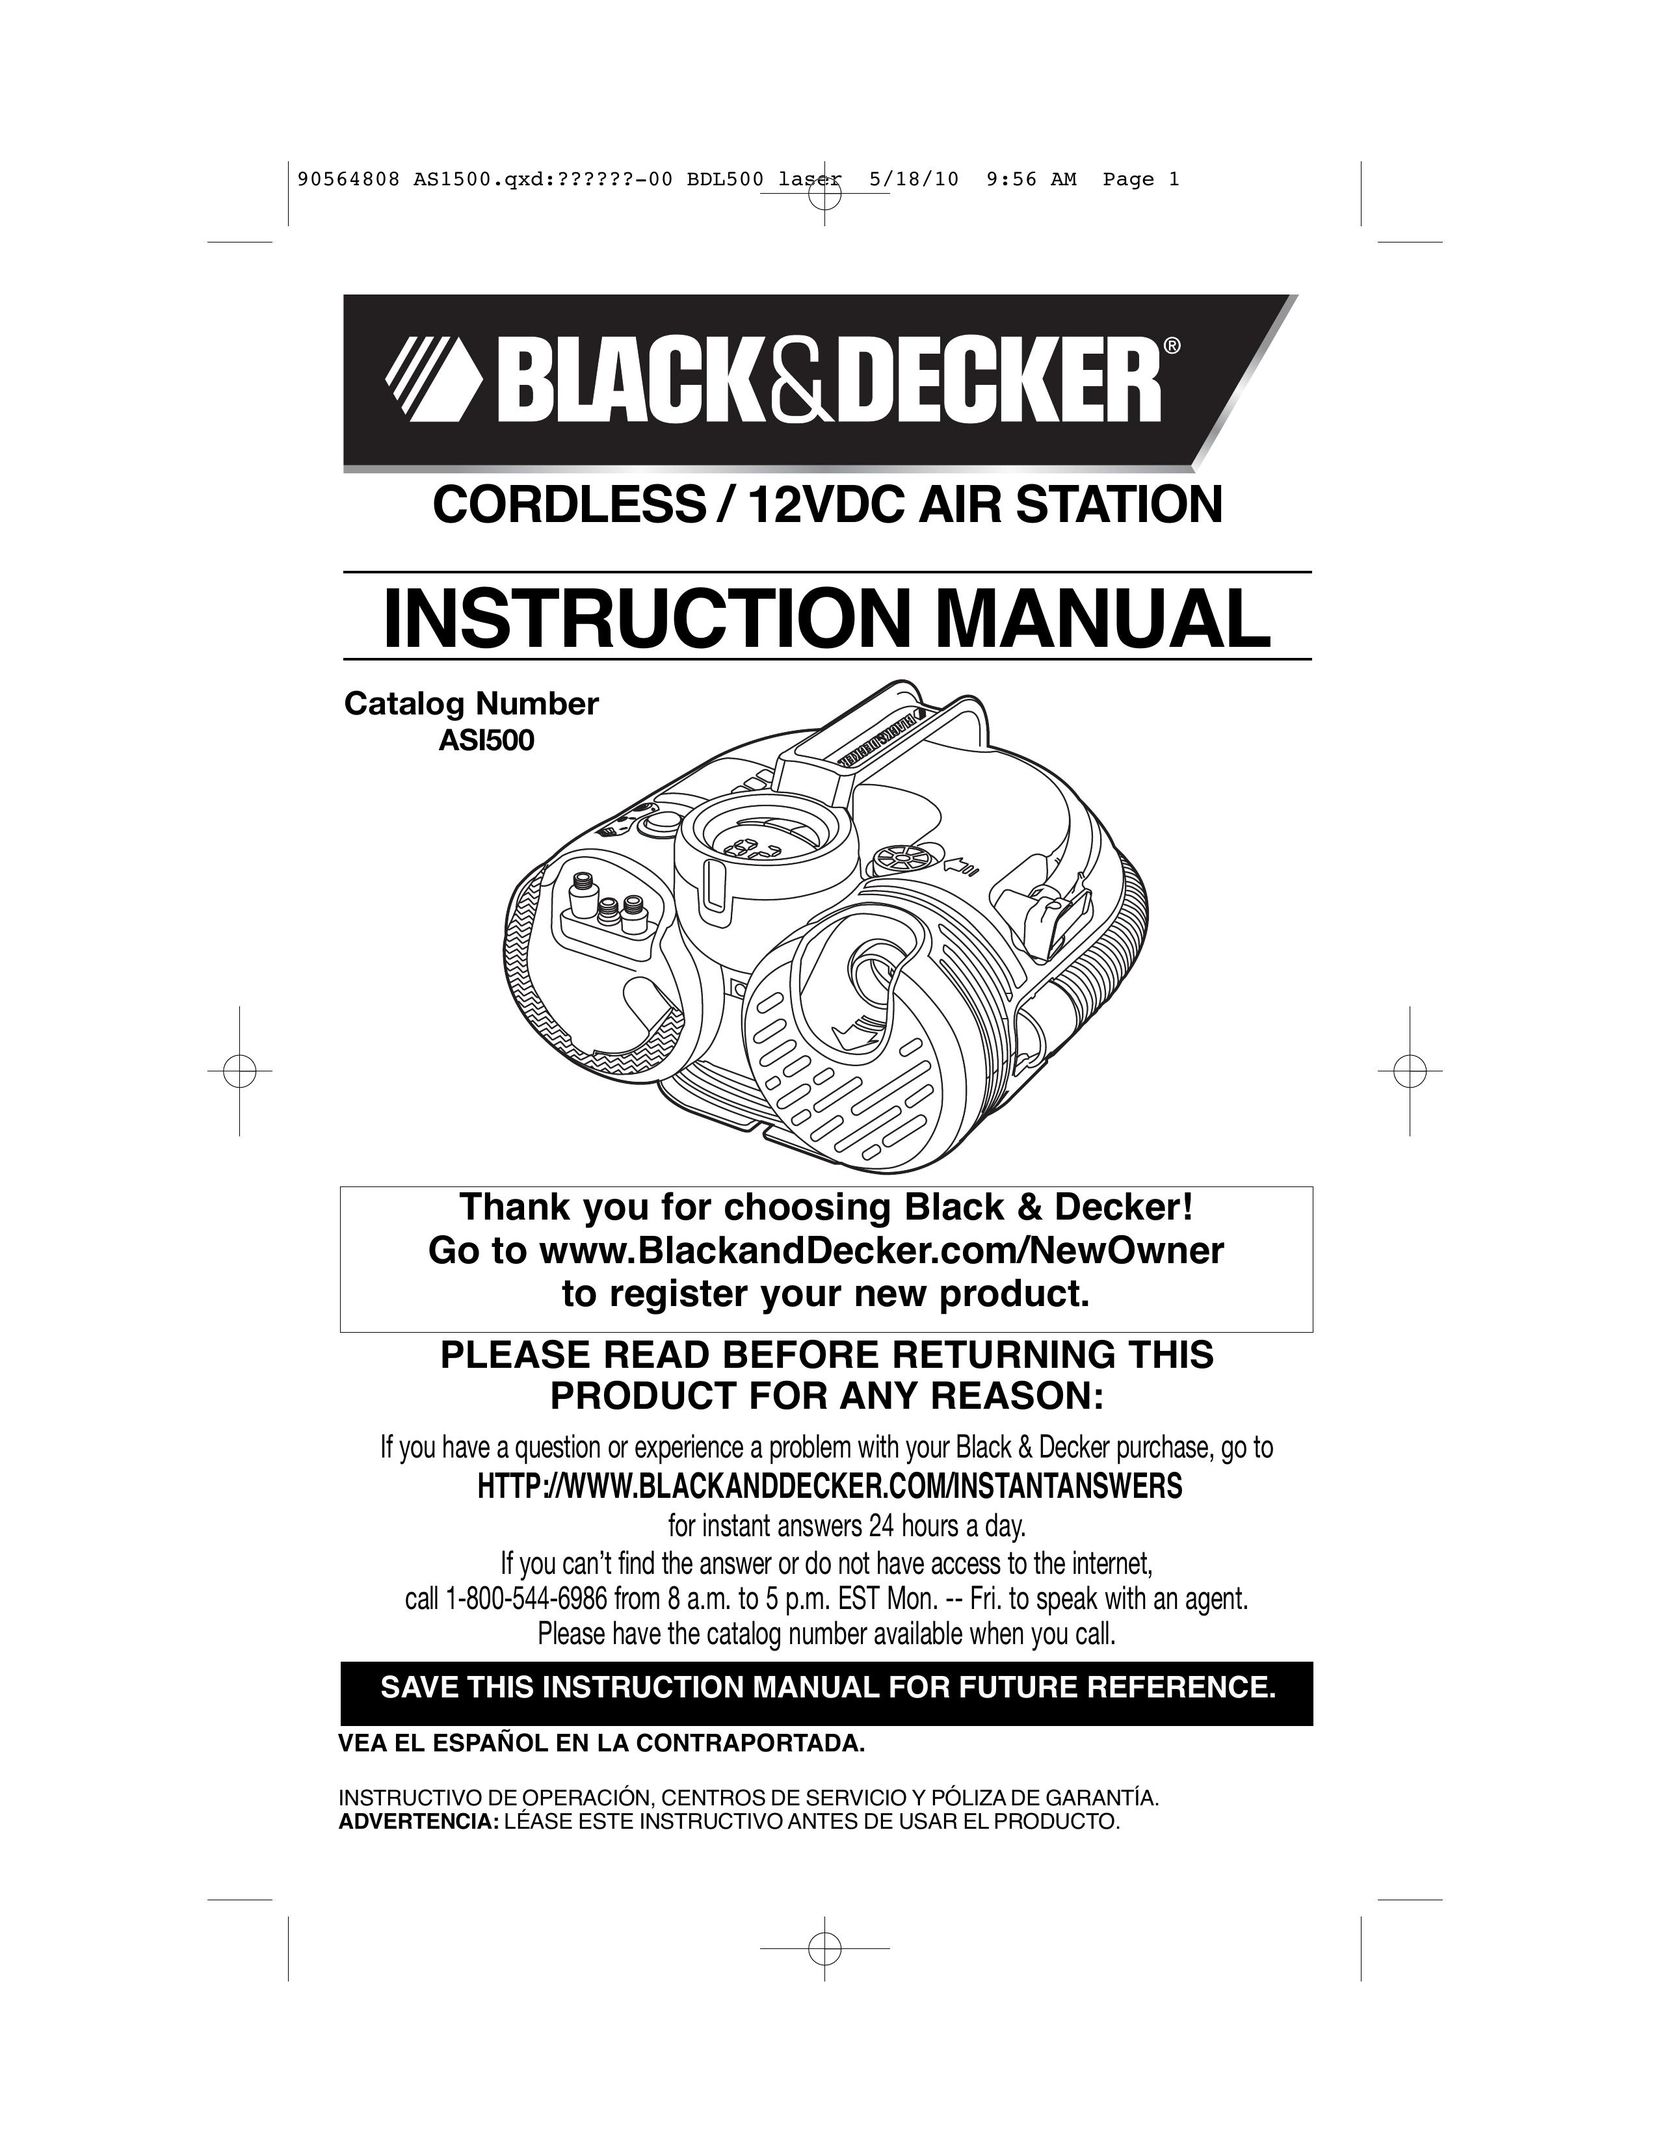 Black & Decker ASI500 Air Compressor User Manual